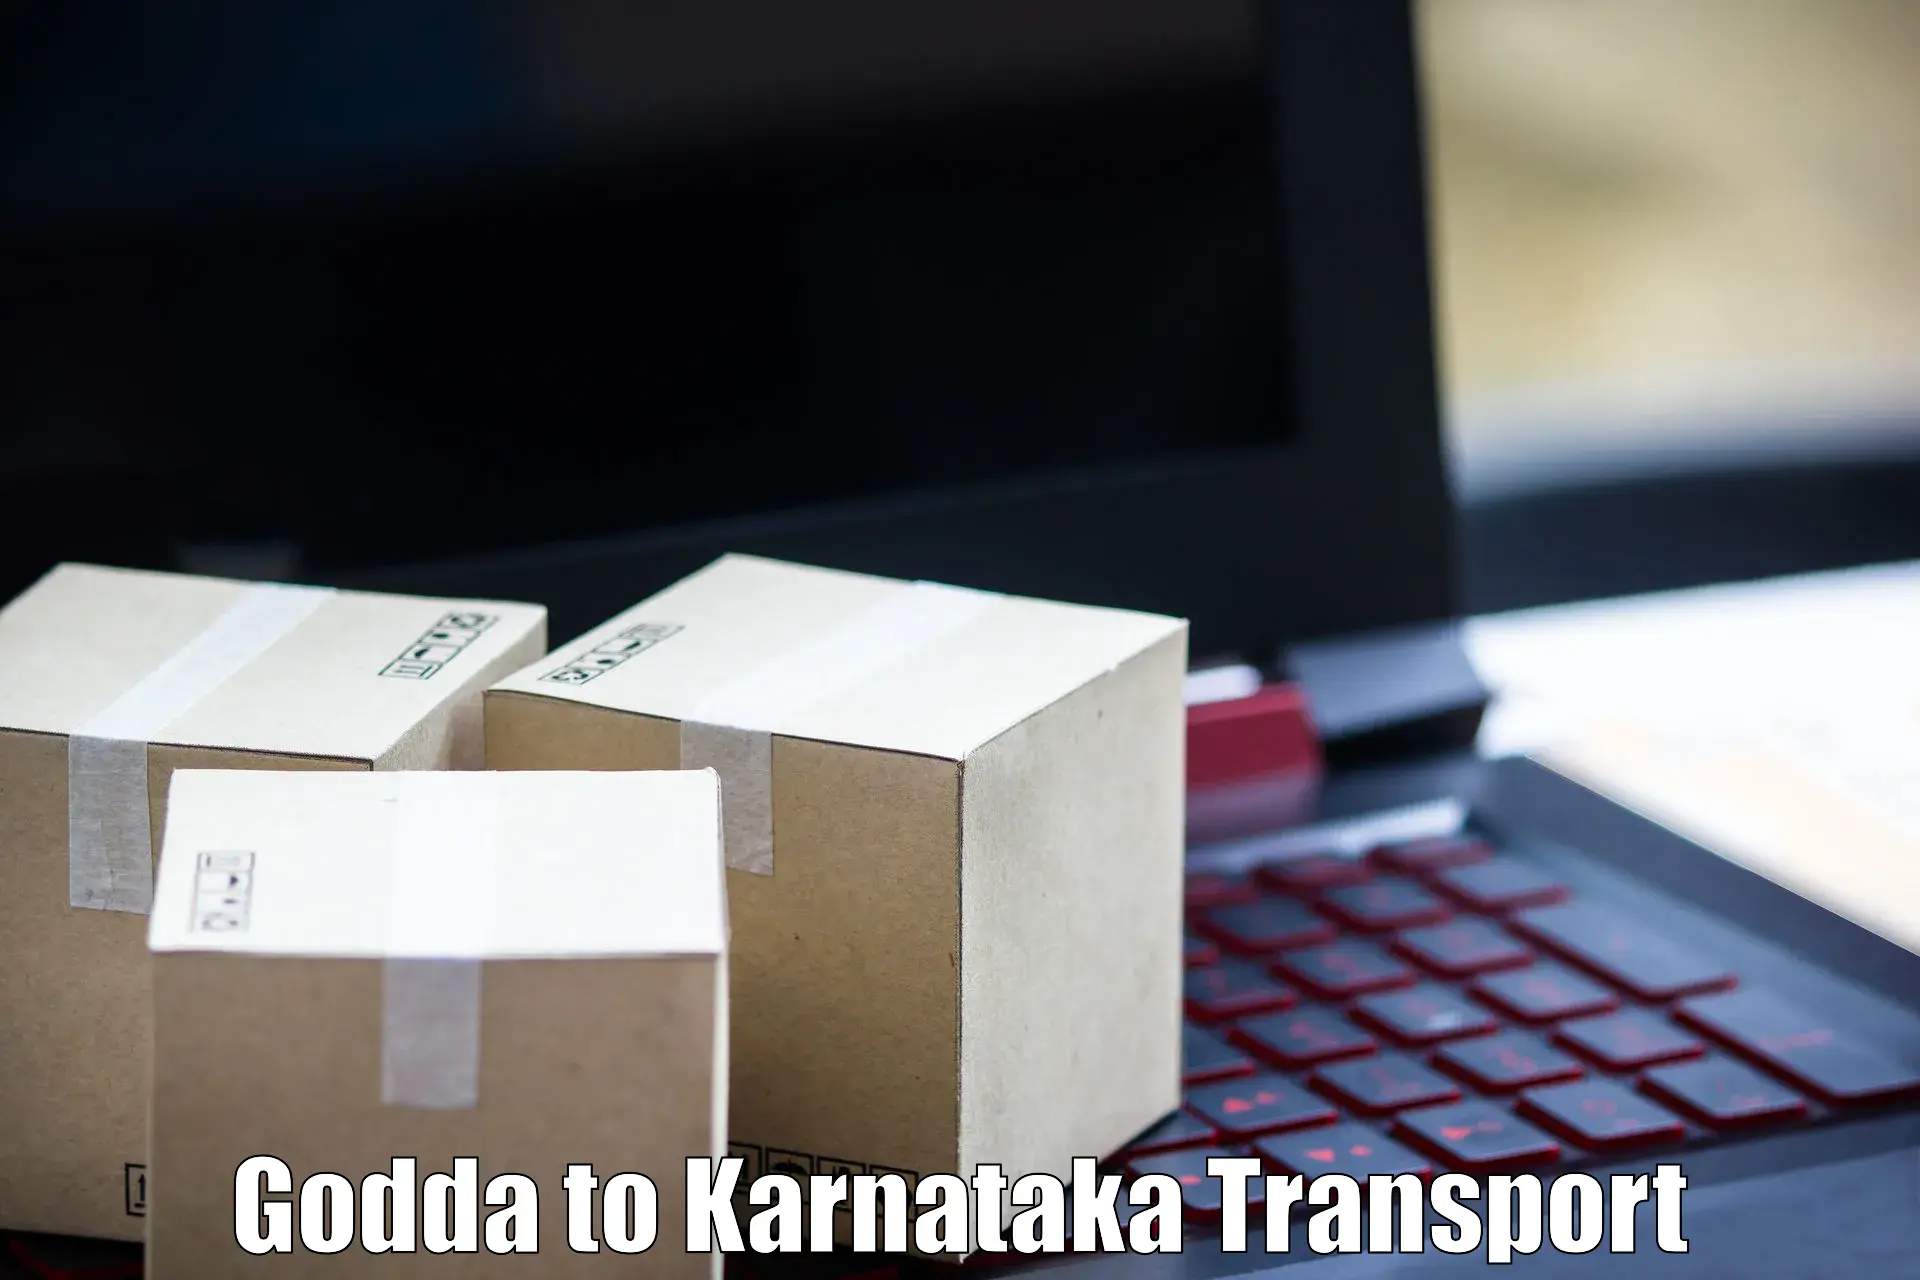 Online transport service Godda to Channarayapatna